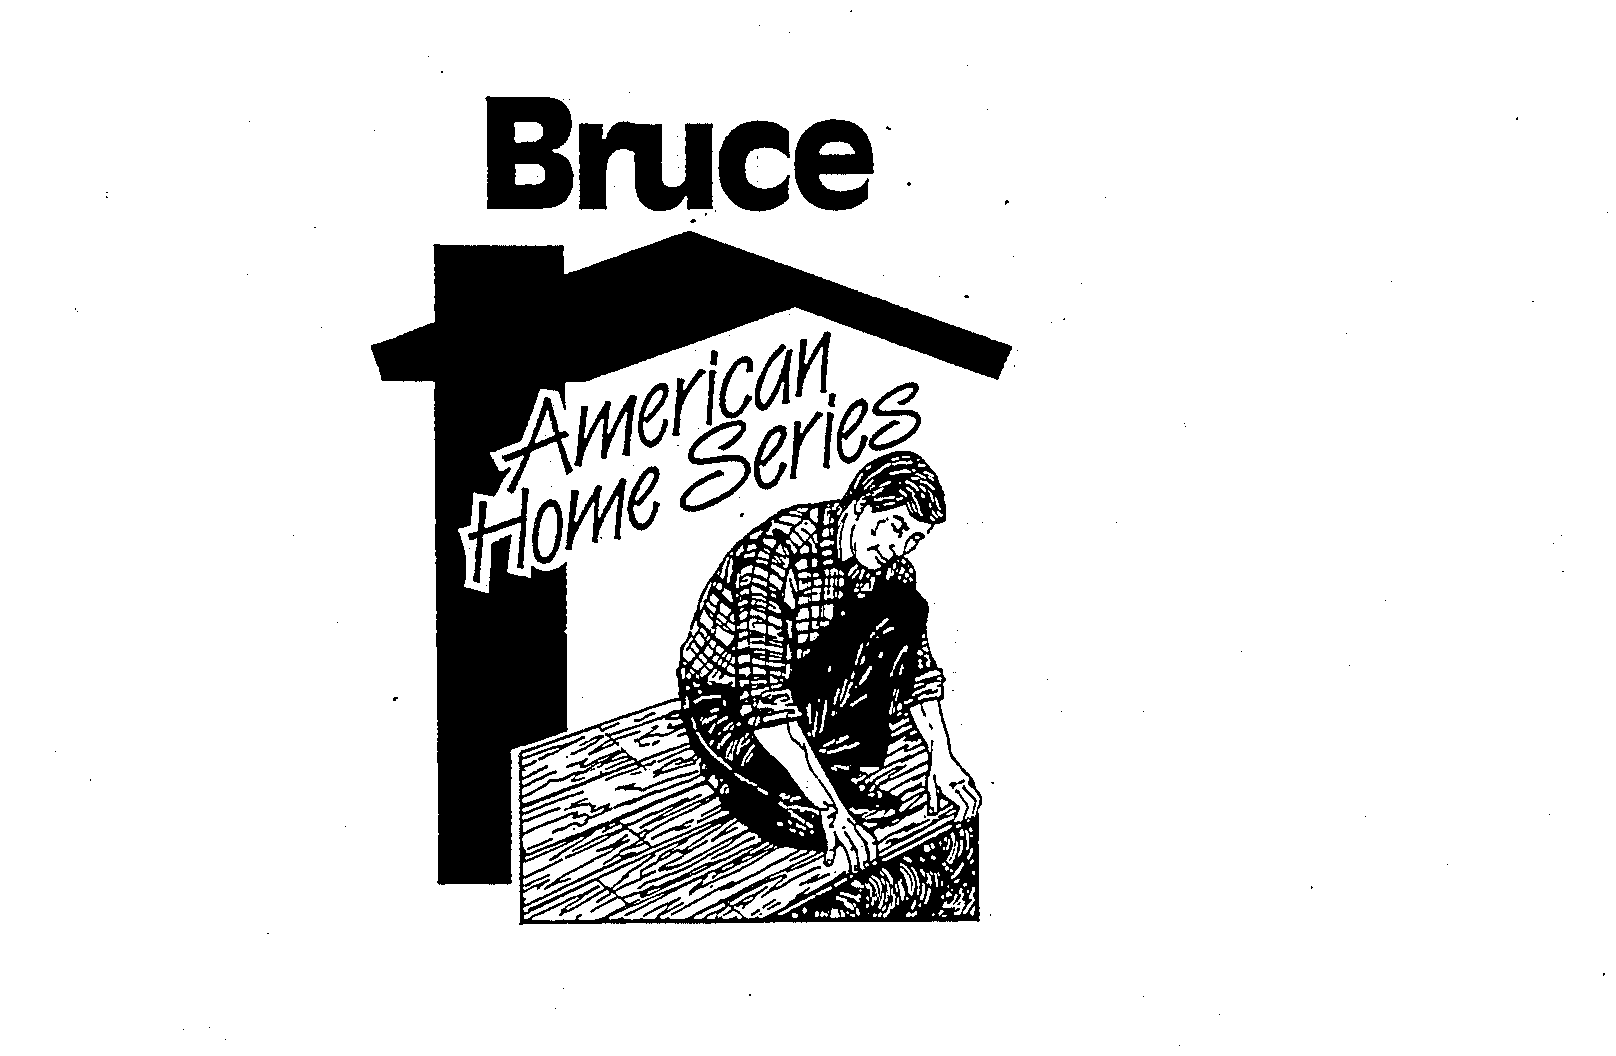  BRUCE AMERICAN HOME SERIES